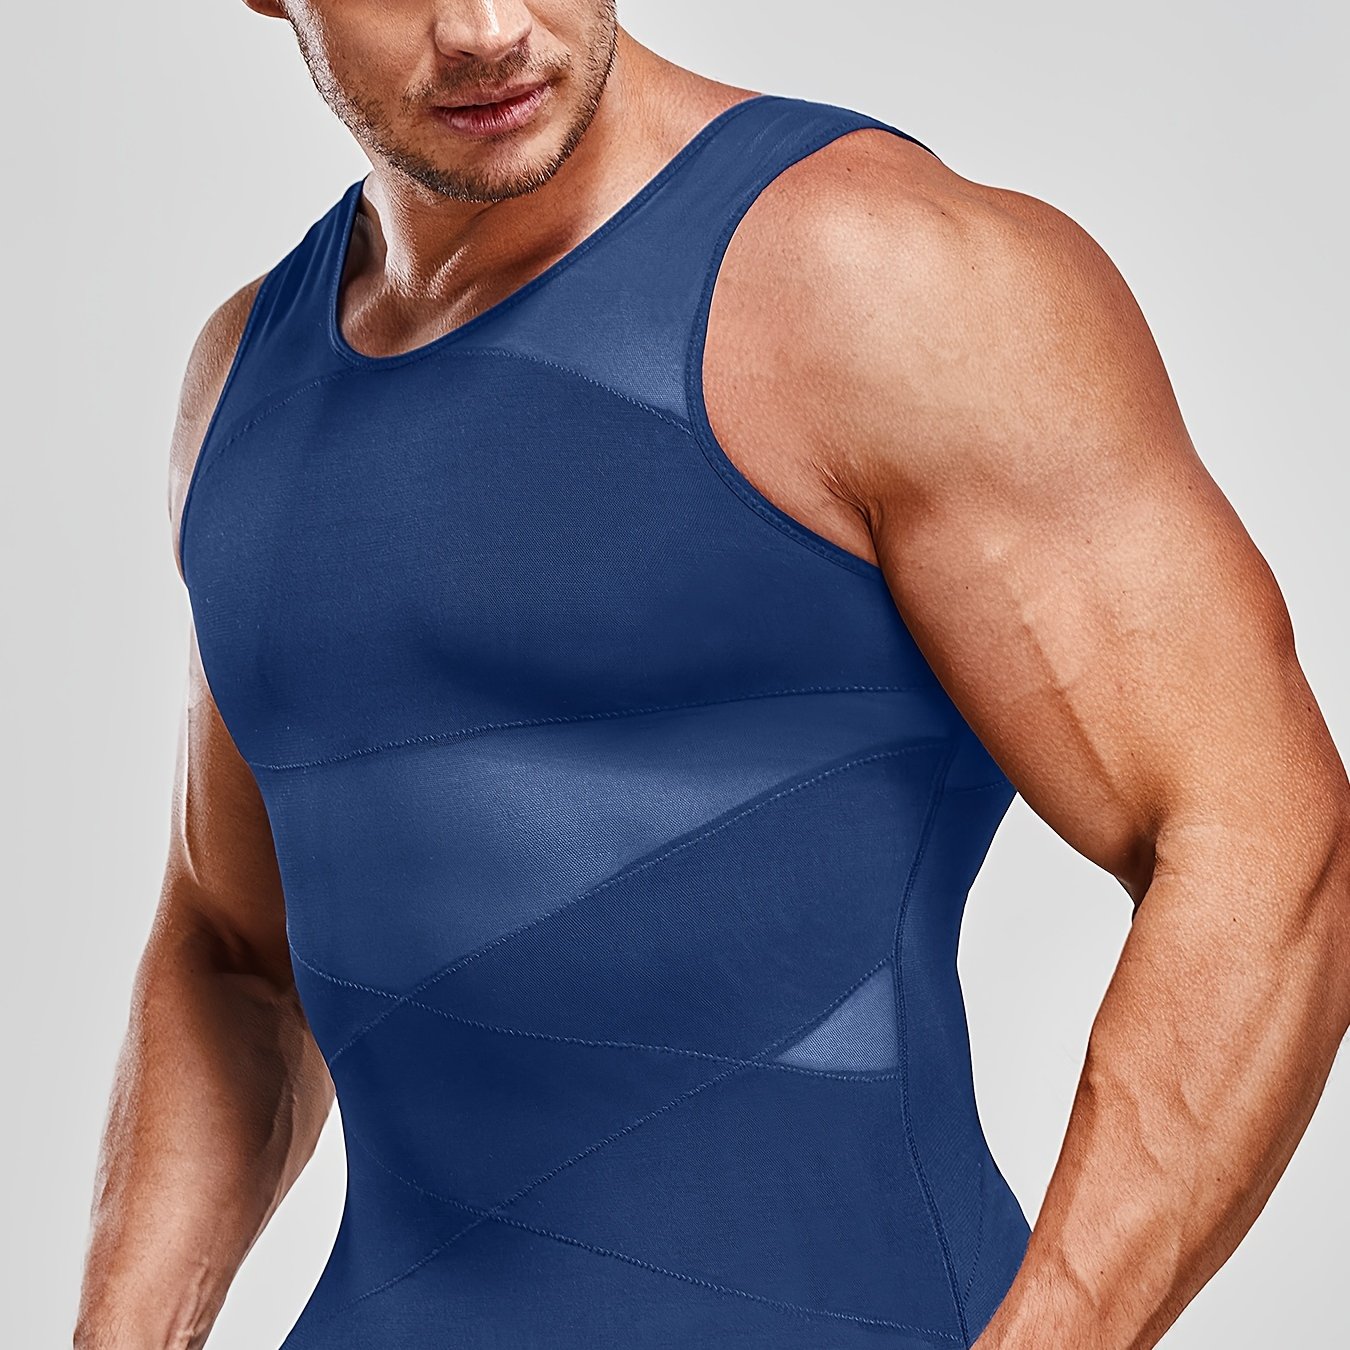 Scarboro Men's Compression Shirt Body Shaper Slimming Vest